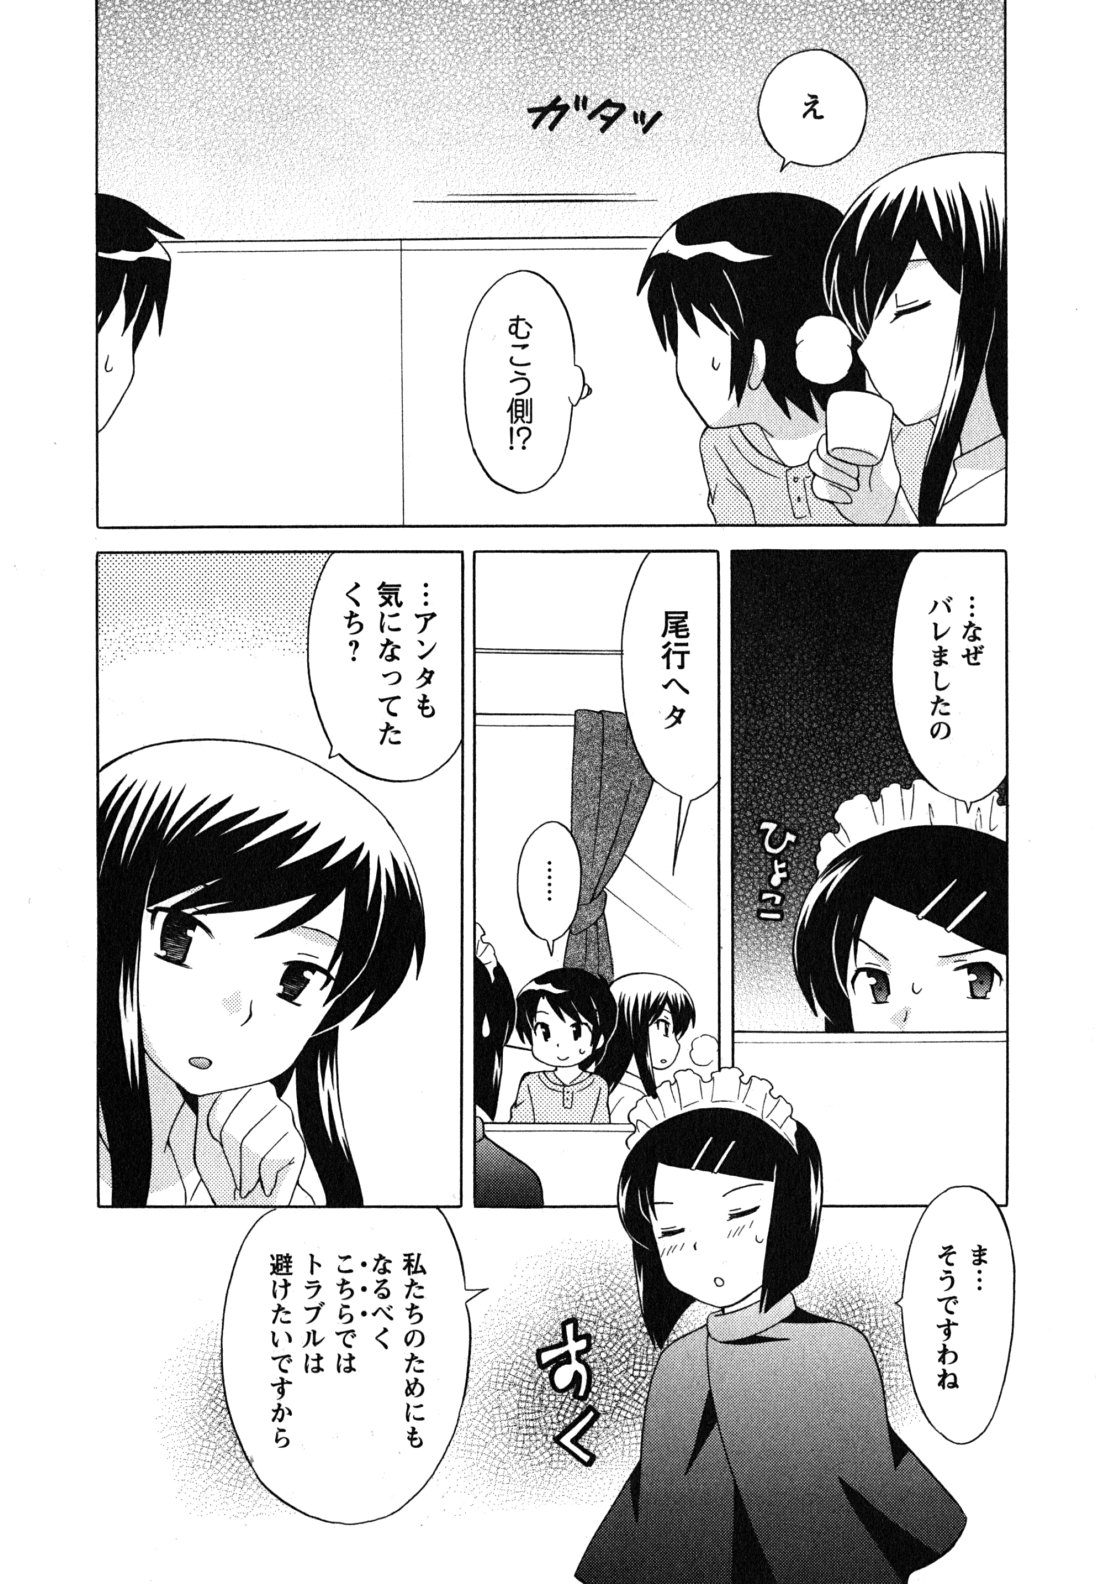 [Kotono Wakako] Maid wa Miracle Vol.4 [琴の若子] メイドはミラクル 第04巻